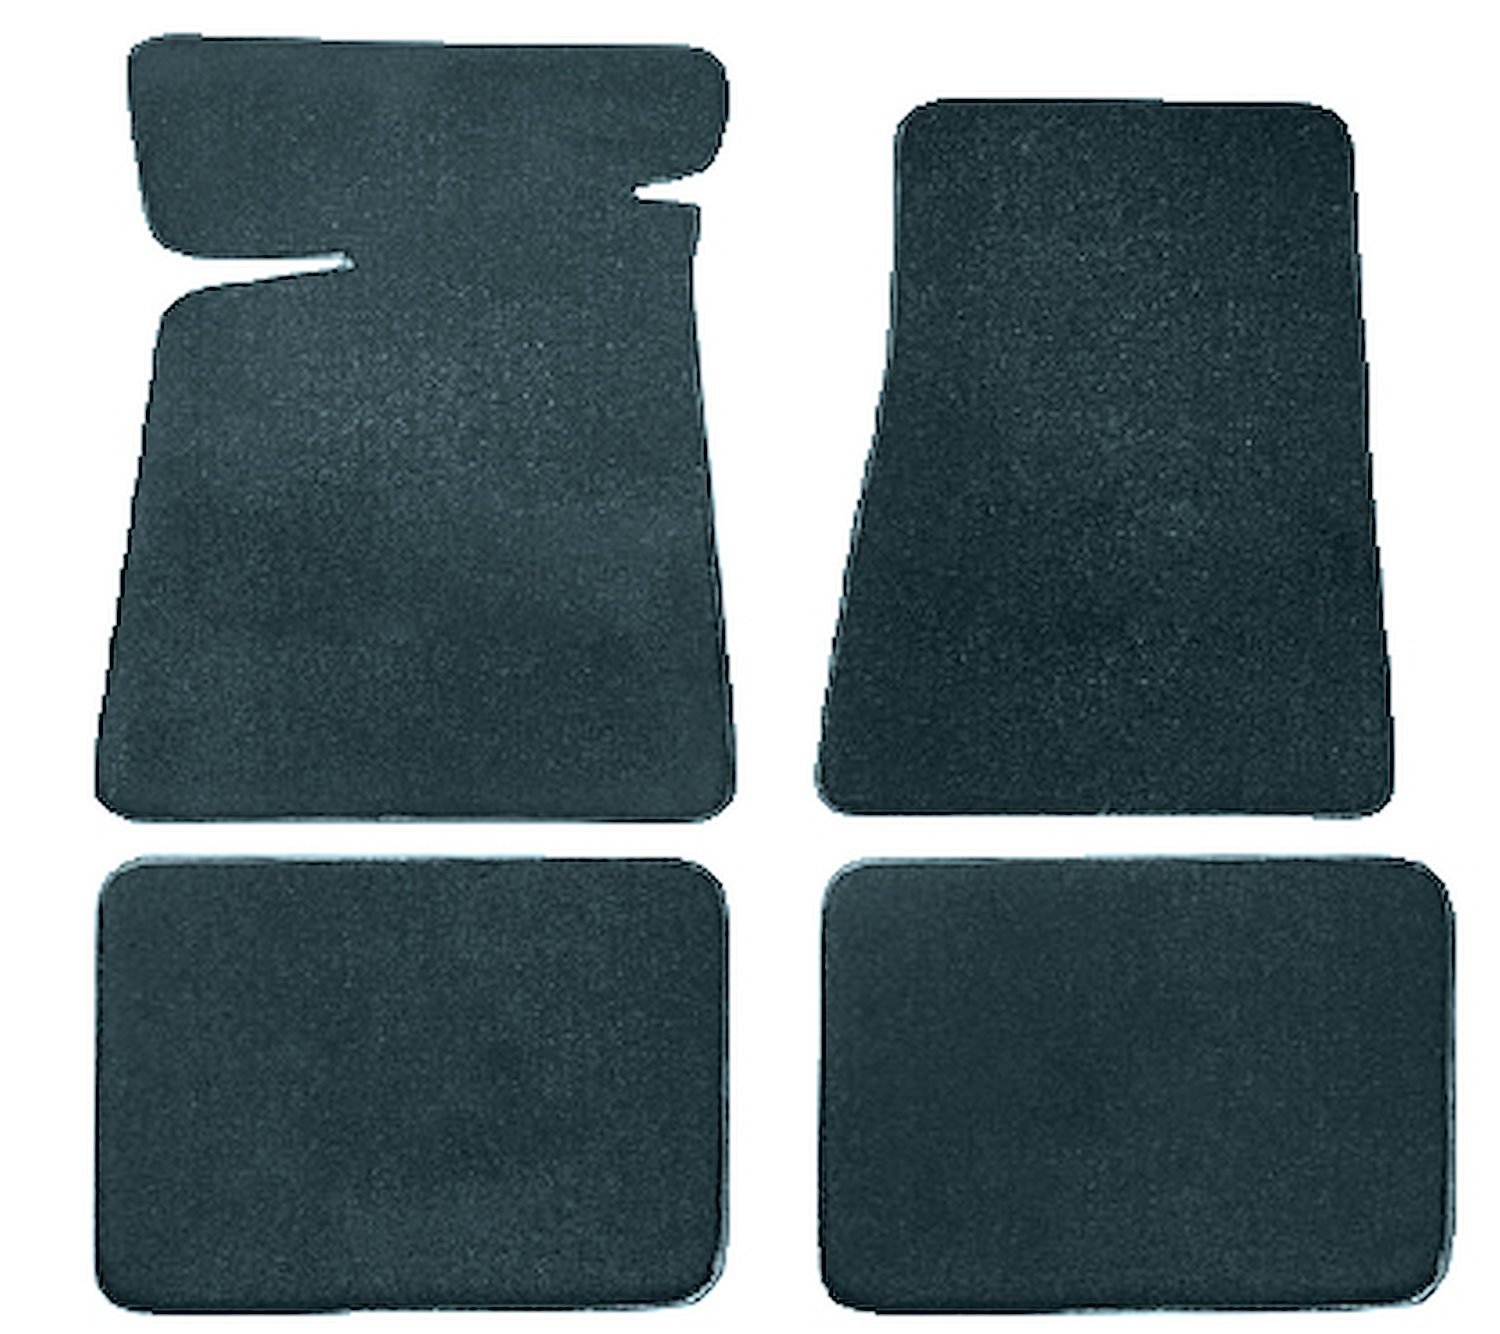 Molded Cut Pile Floor Mats Fits Select 1978-1987 Buick, Chevrolet, Oldsmobile, Ponitac Models [4-Piece, Dark Blue]